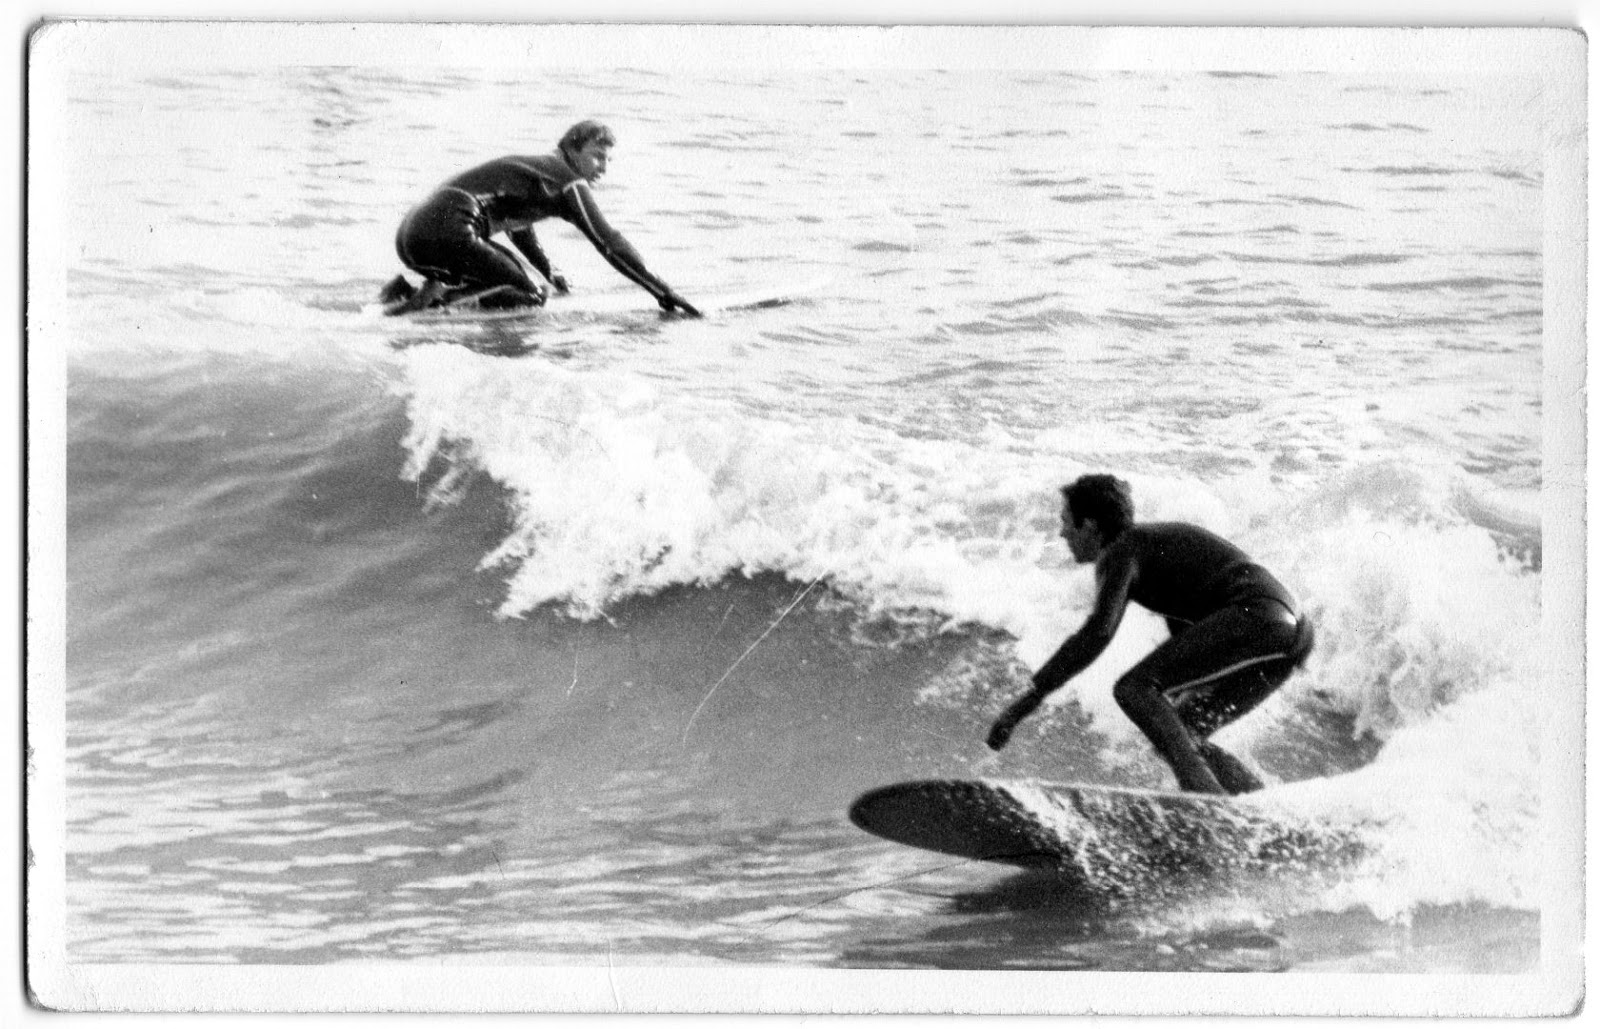 KLEMM BELL SURFBOARDS Vintage Retro Sticker Decal 1970s LONGBOARD SURFER SURF 